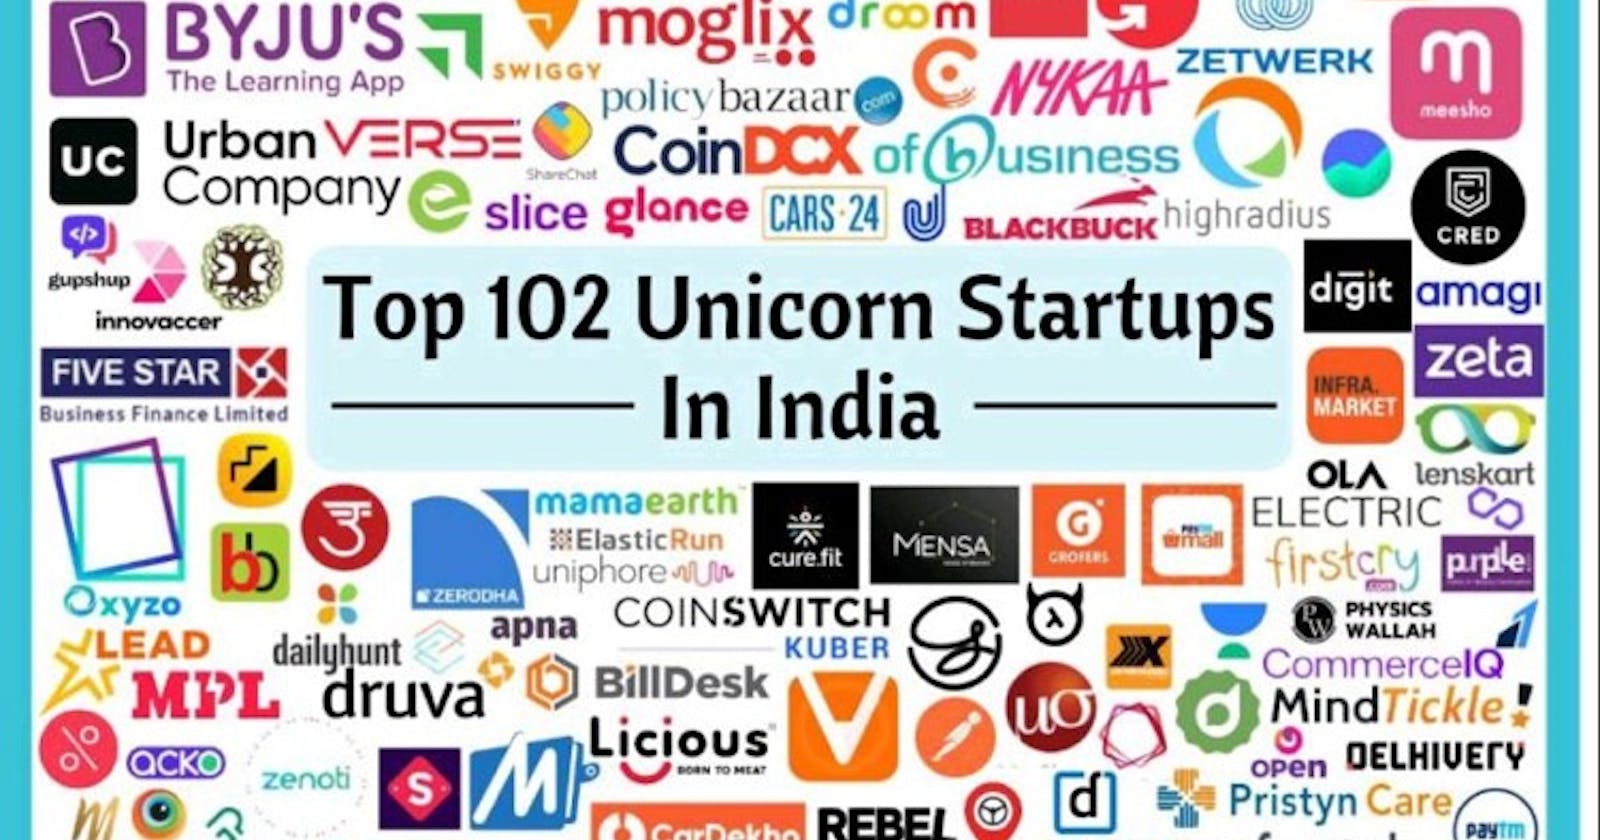 Unicorn startups